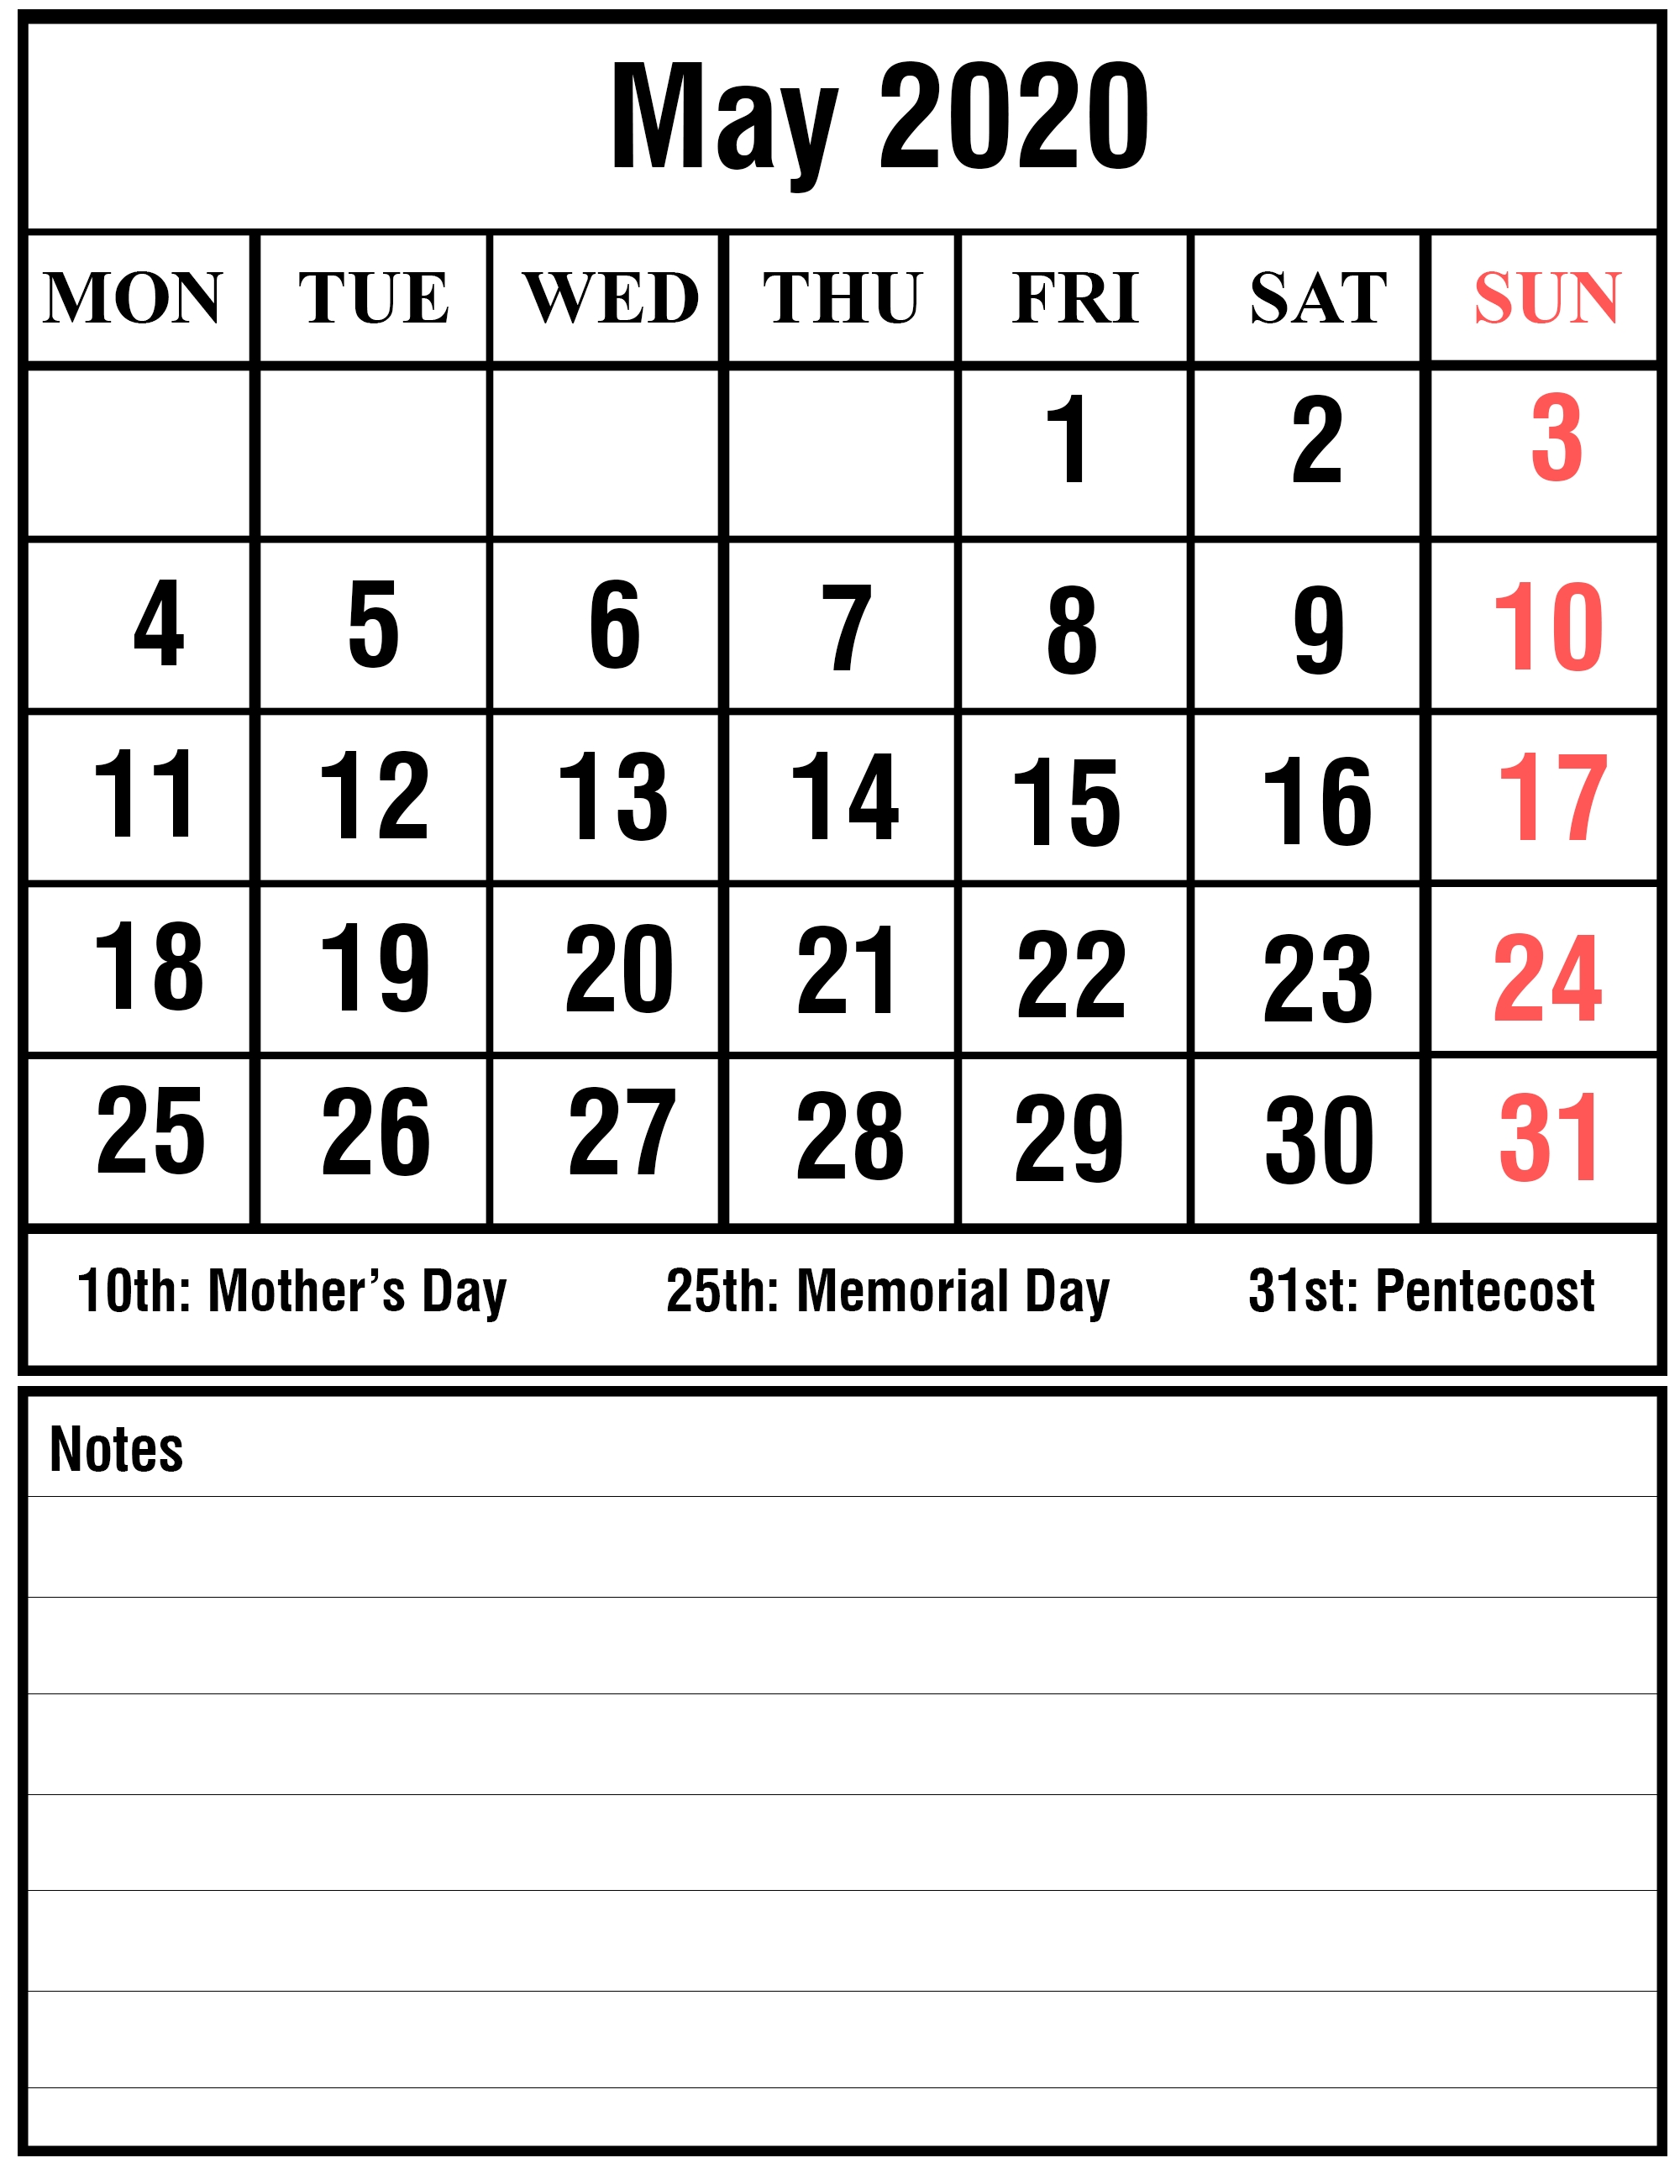 May 2020 Calendar Page | Blank Calendar Template, Calendar May 1 2020 Calendar